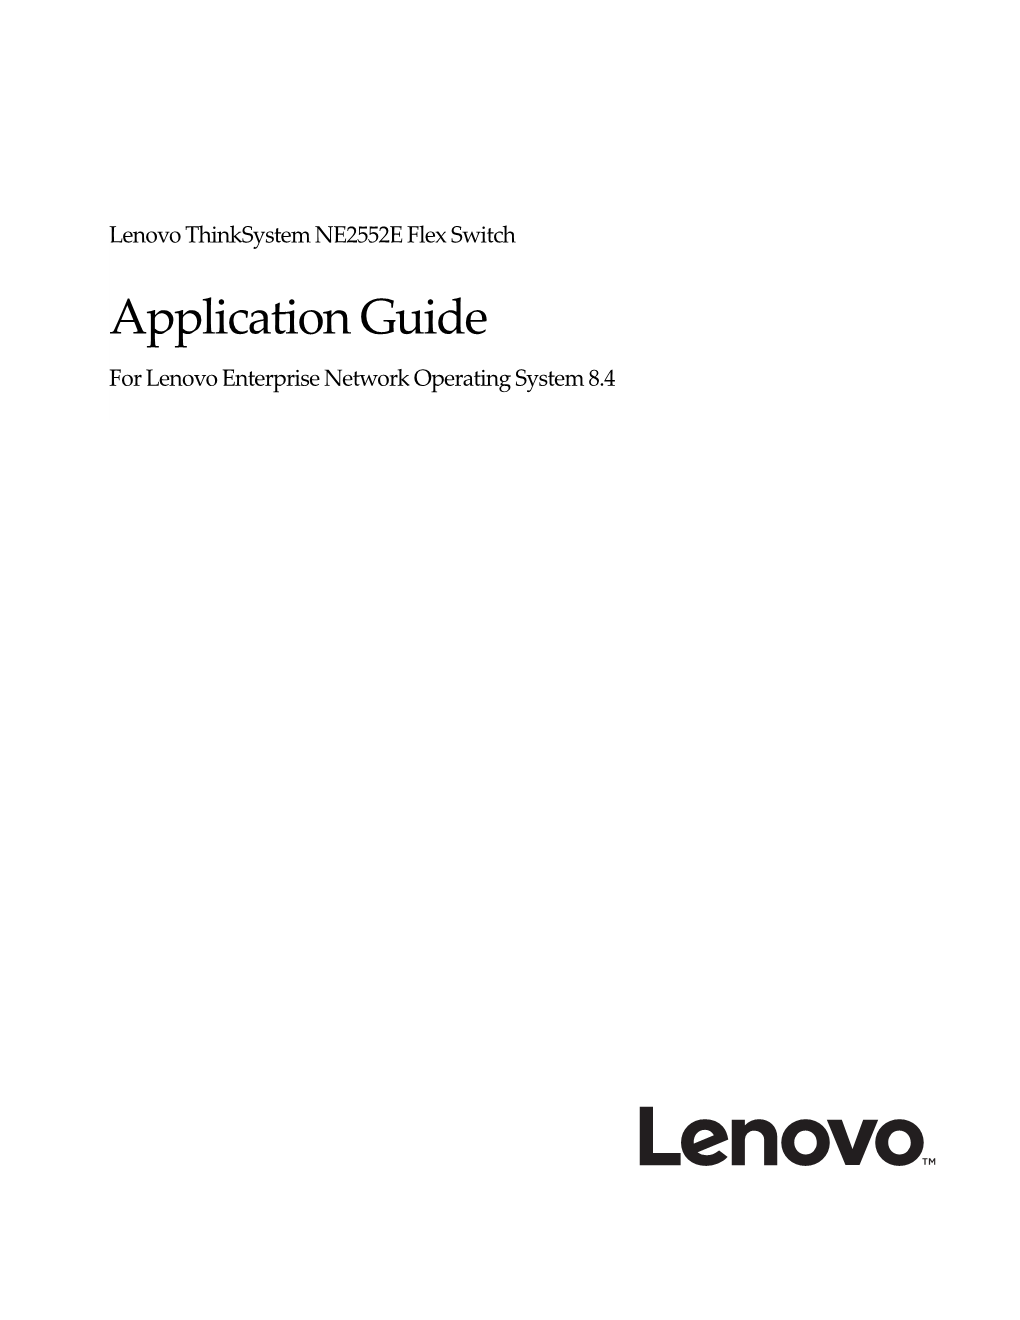 Lenovo Thinksystem NE2552E Flex Switch Application Guide